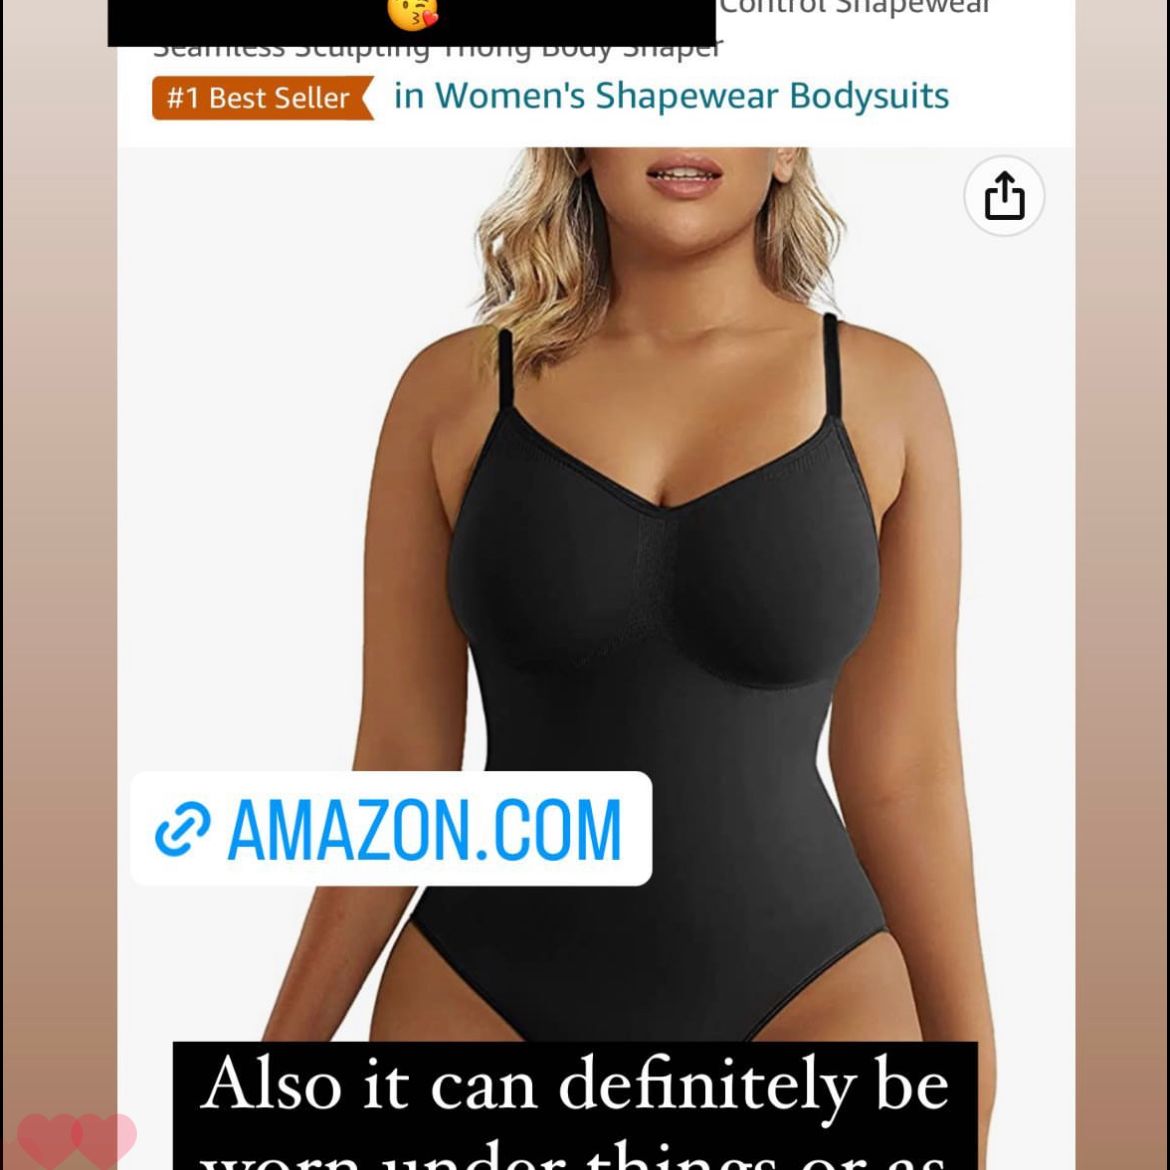 Amazon Bodysuit Story